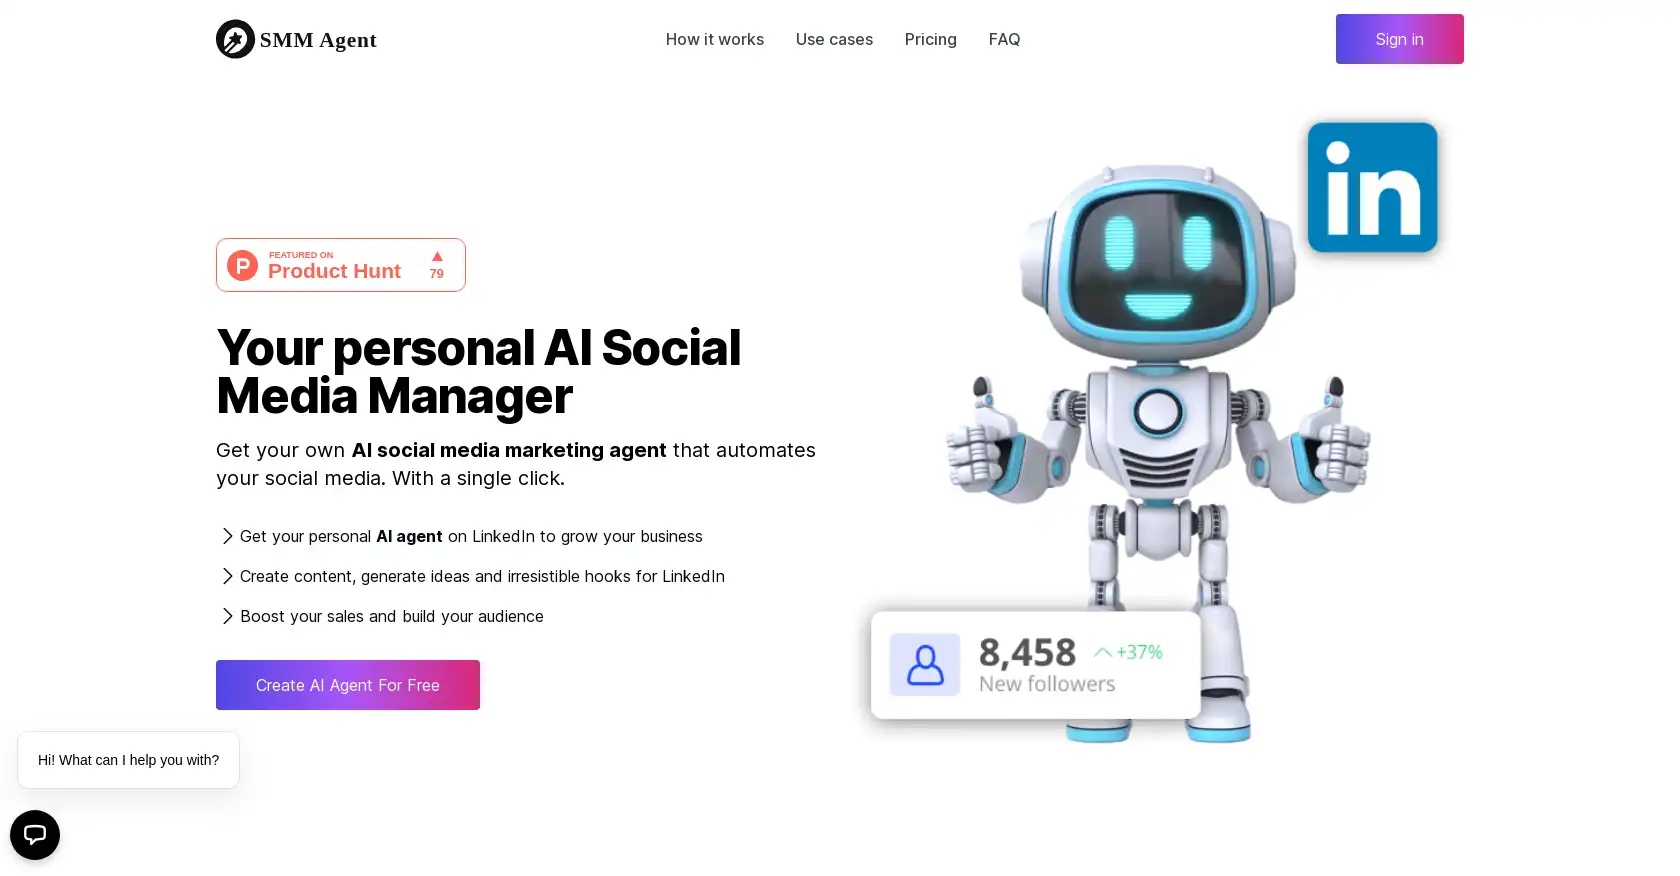 SMM Agent - AI tool for Social media marketing, Content generation, Social Media Manager